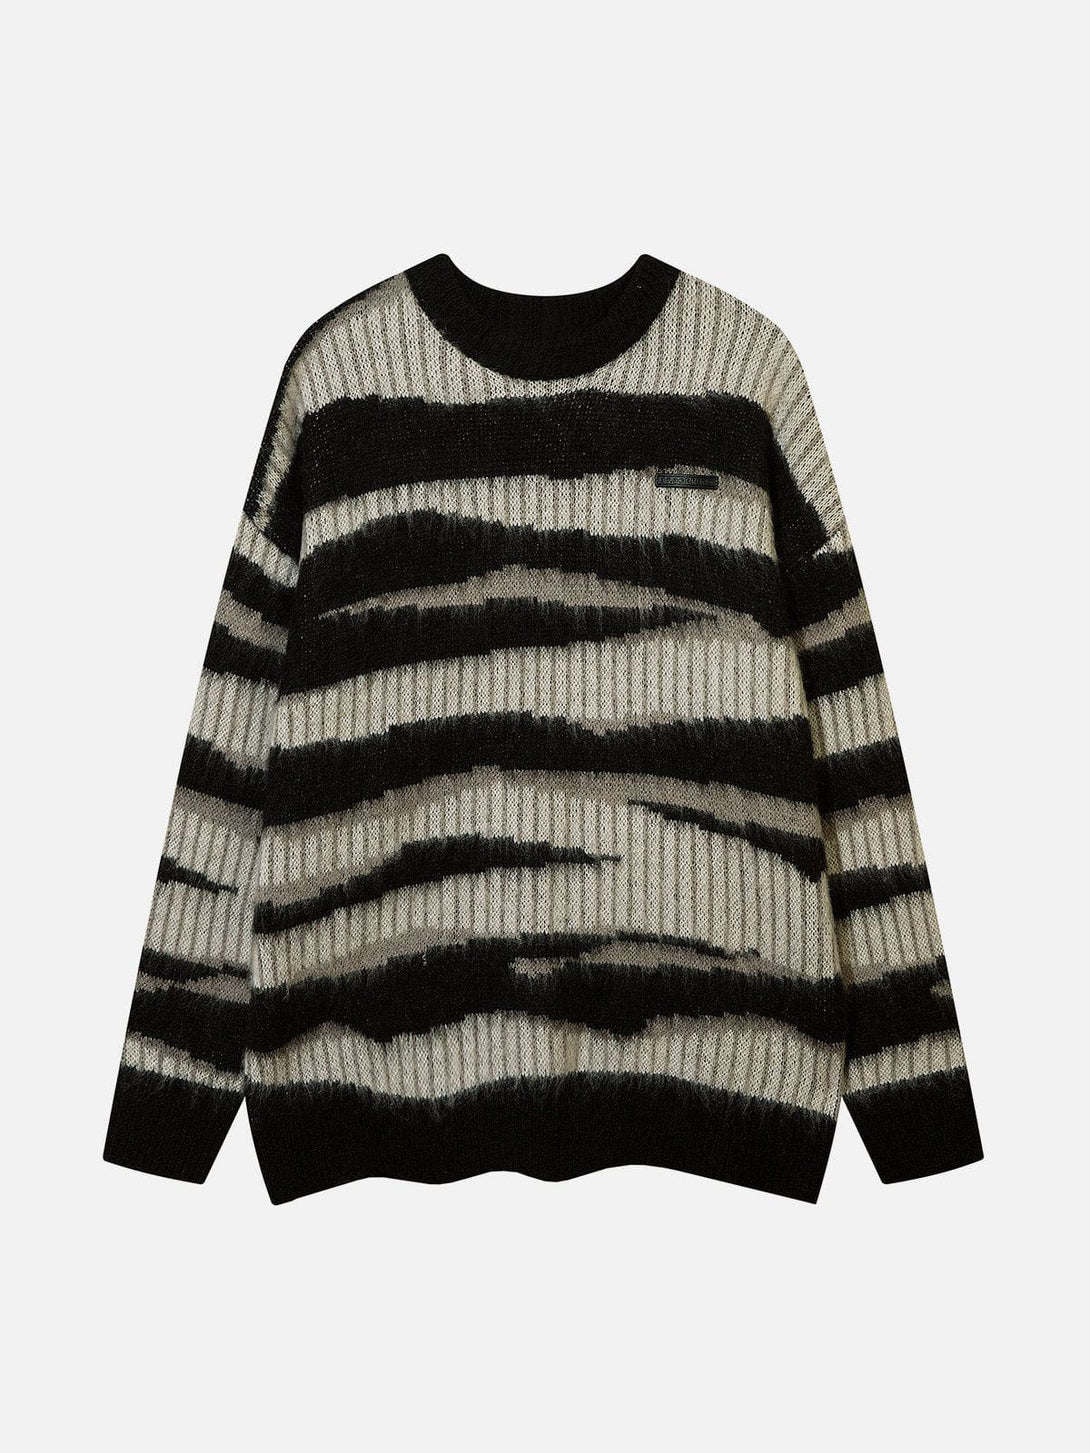 Majesda® - Zebra Print Mohair Sweater outfit ideas streetwear fashion